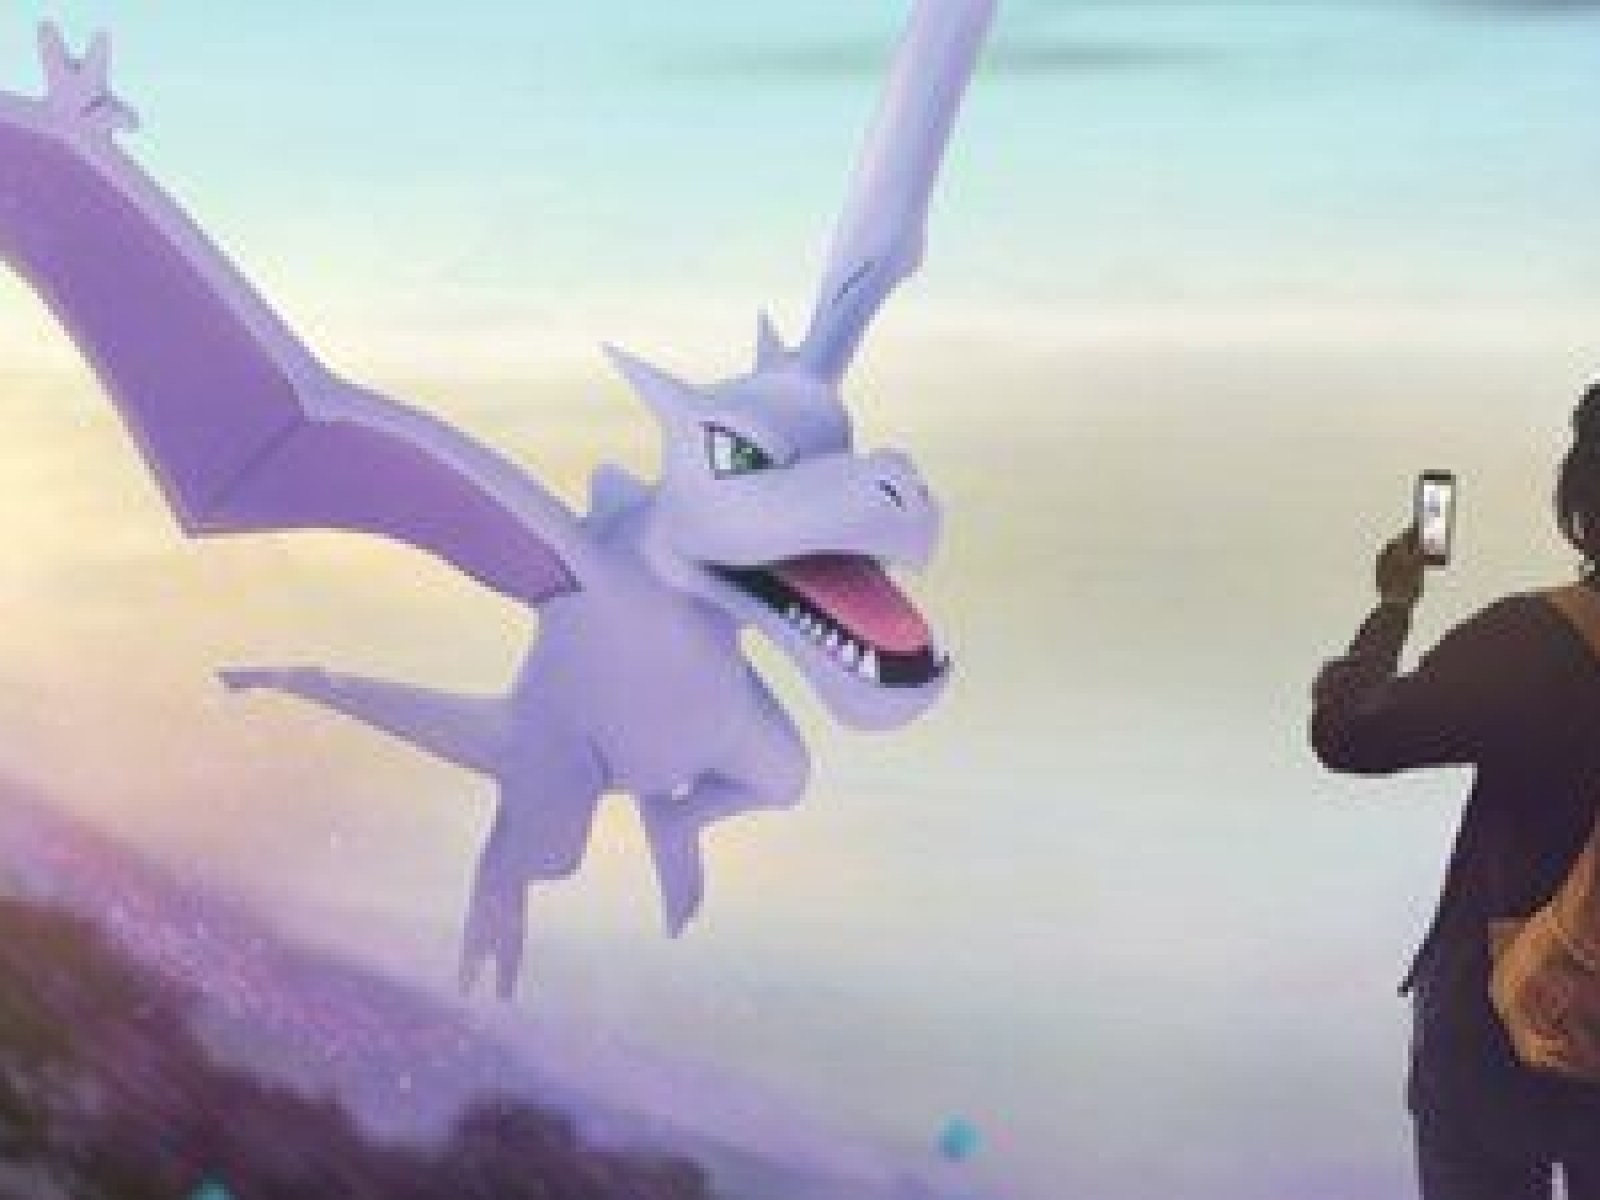 Pokémon Go' Raid Boss Update: Fossil Pokémon Return